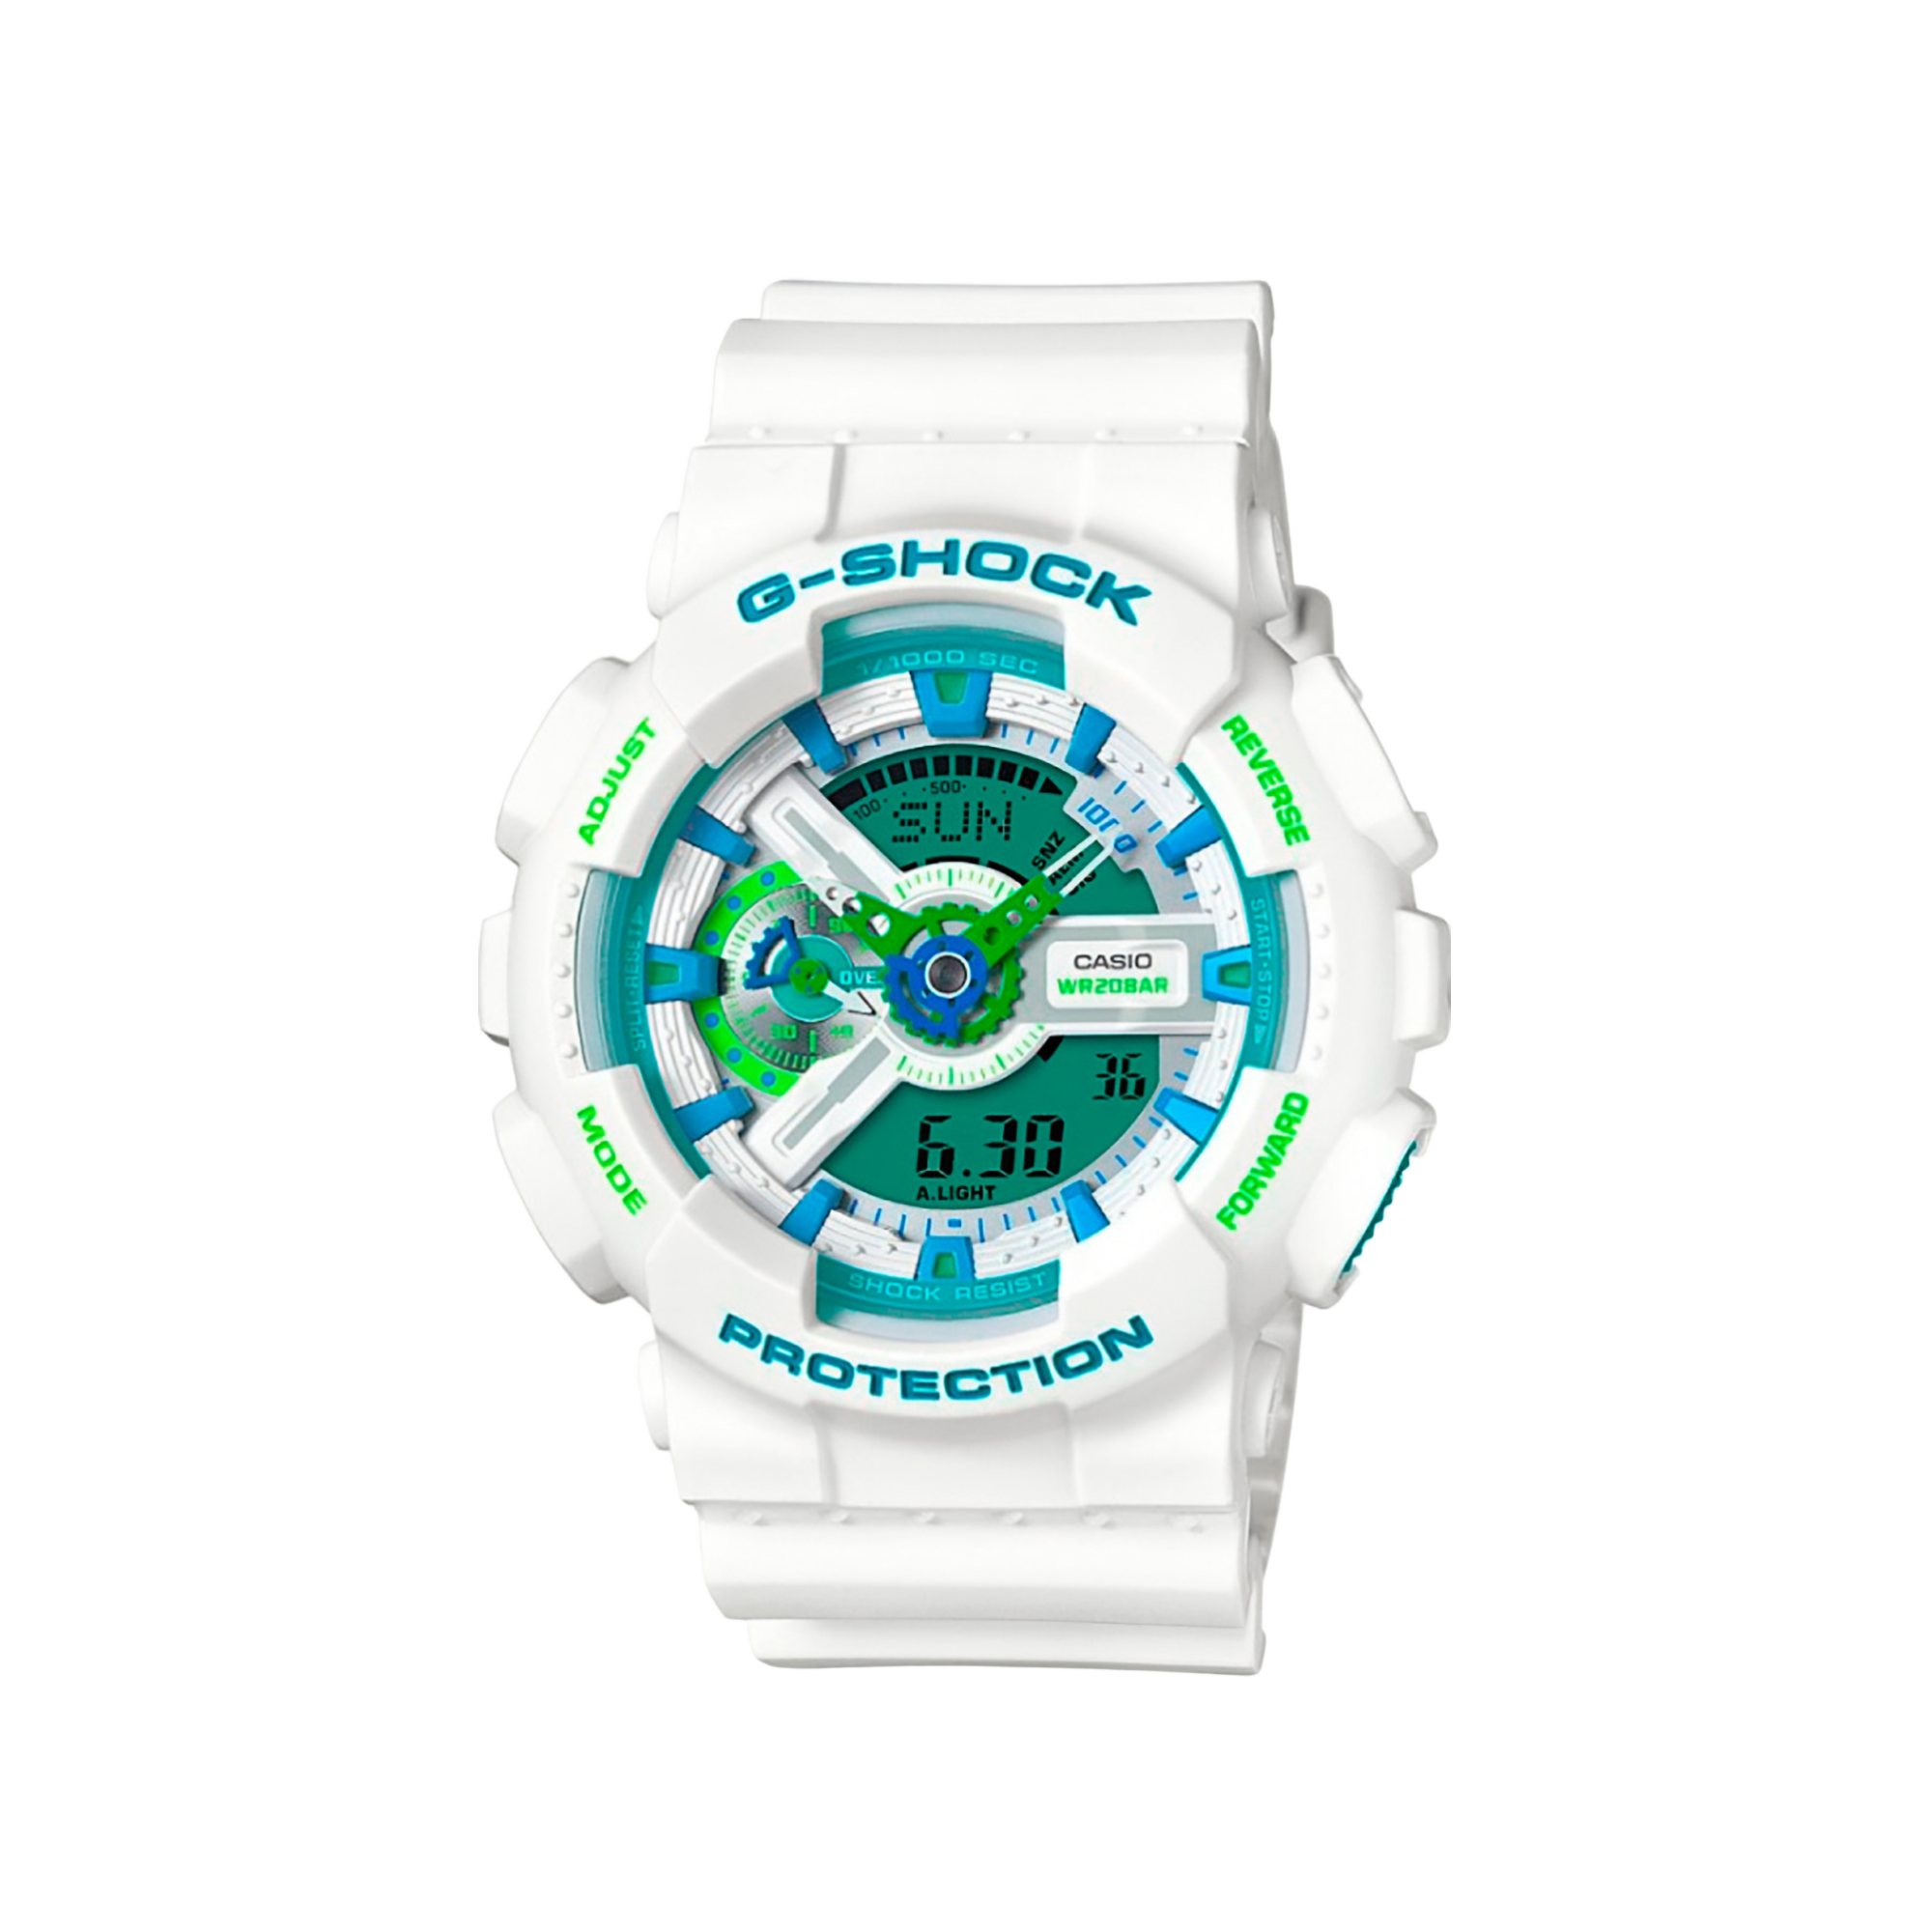 CASIO Casio G-Shock White Analog-Digital Men's Watch GA-110WG-7ADR